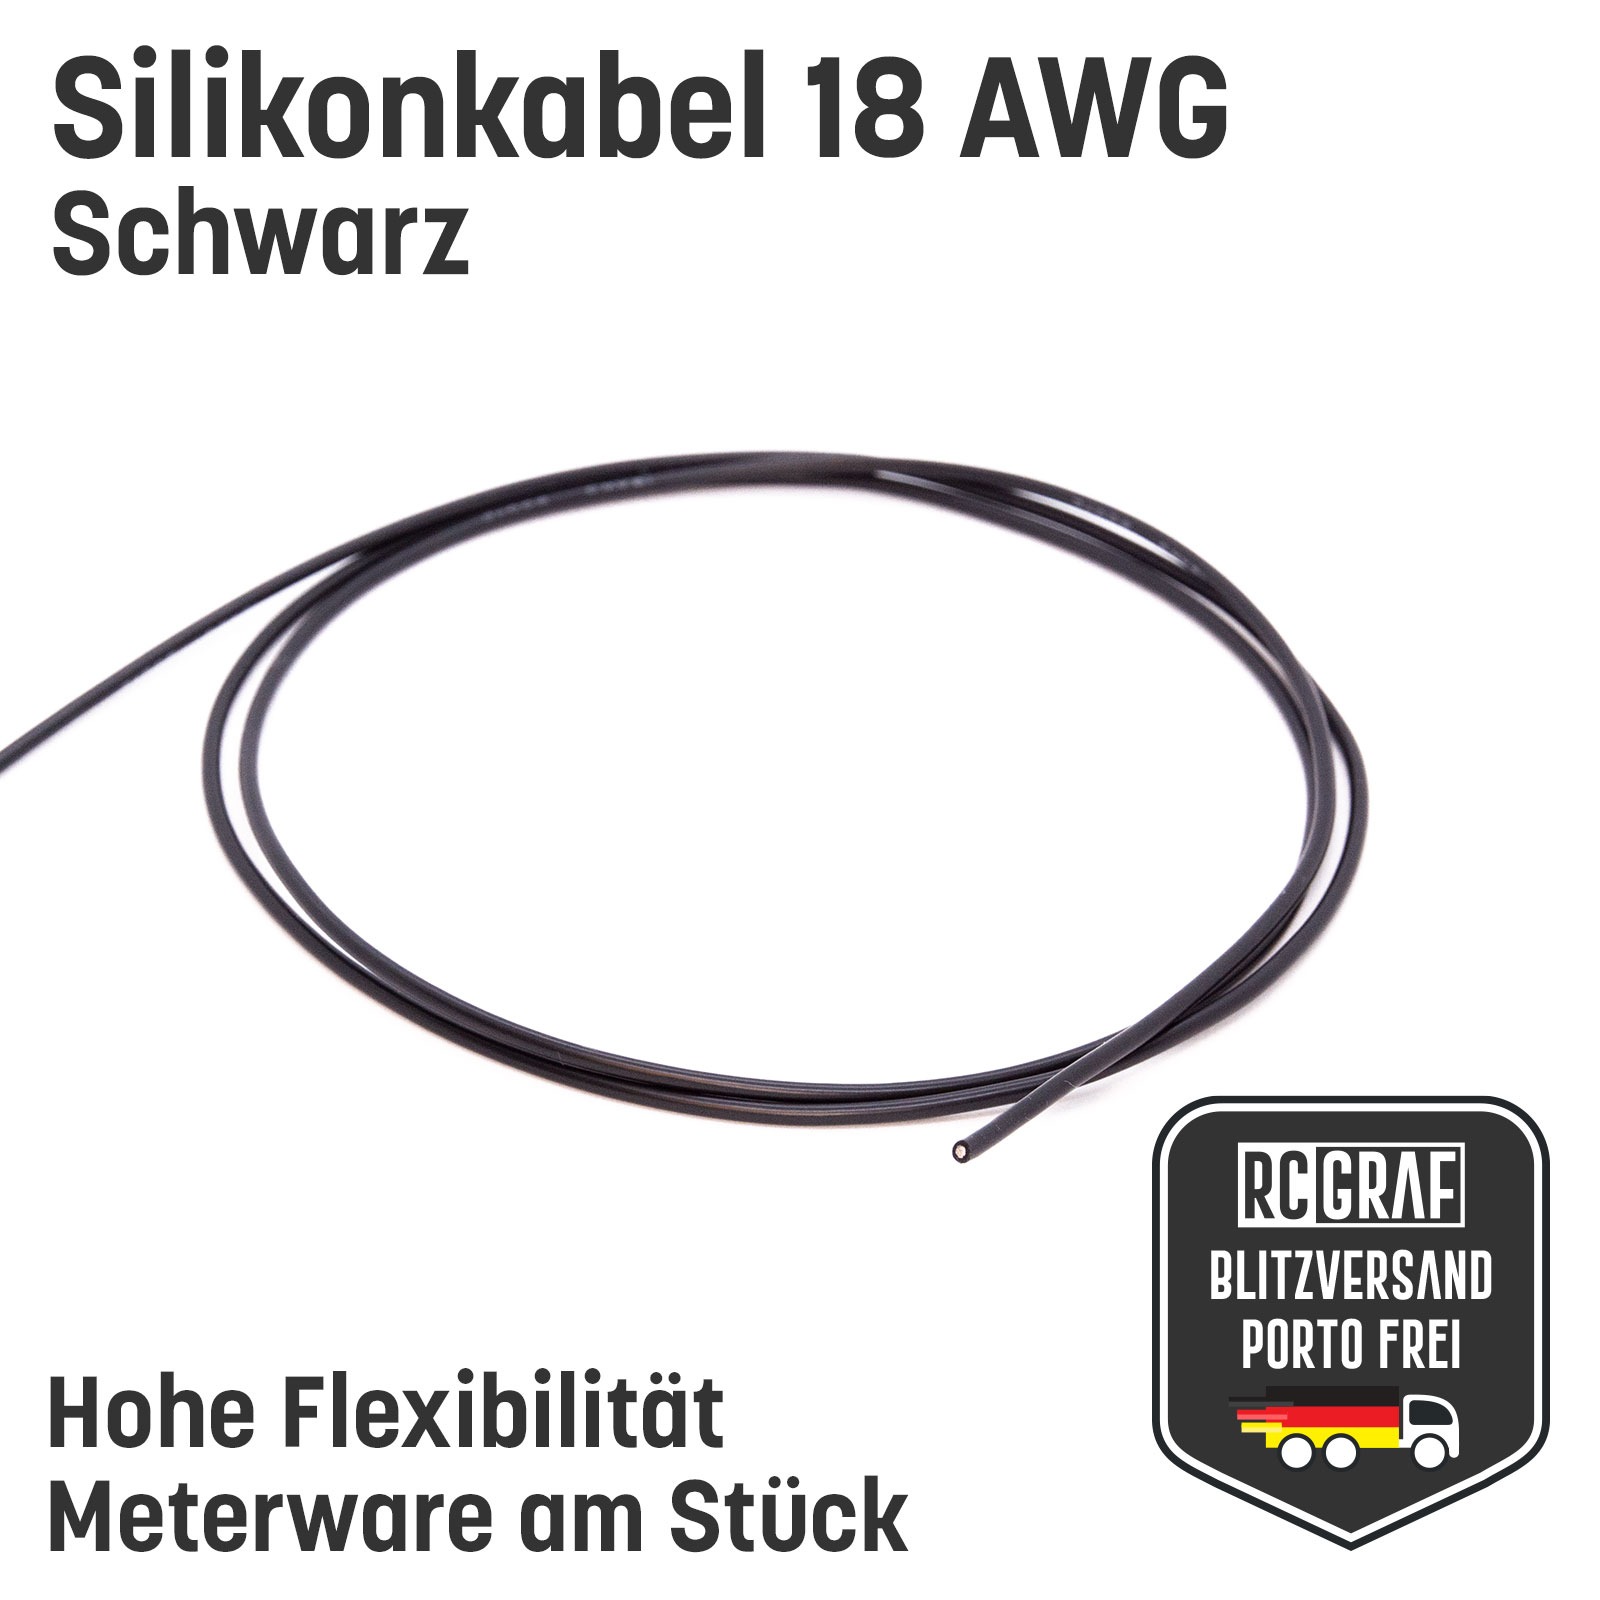 Silikonkabel 18 AWG 3 Meter Schwarz hochflexibel